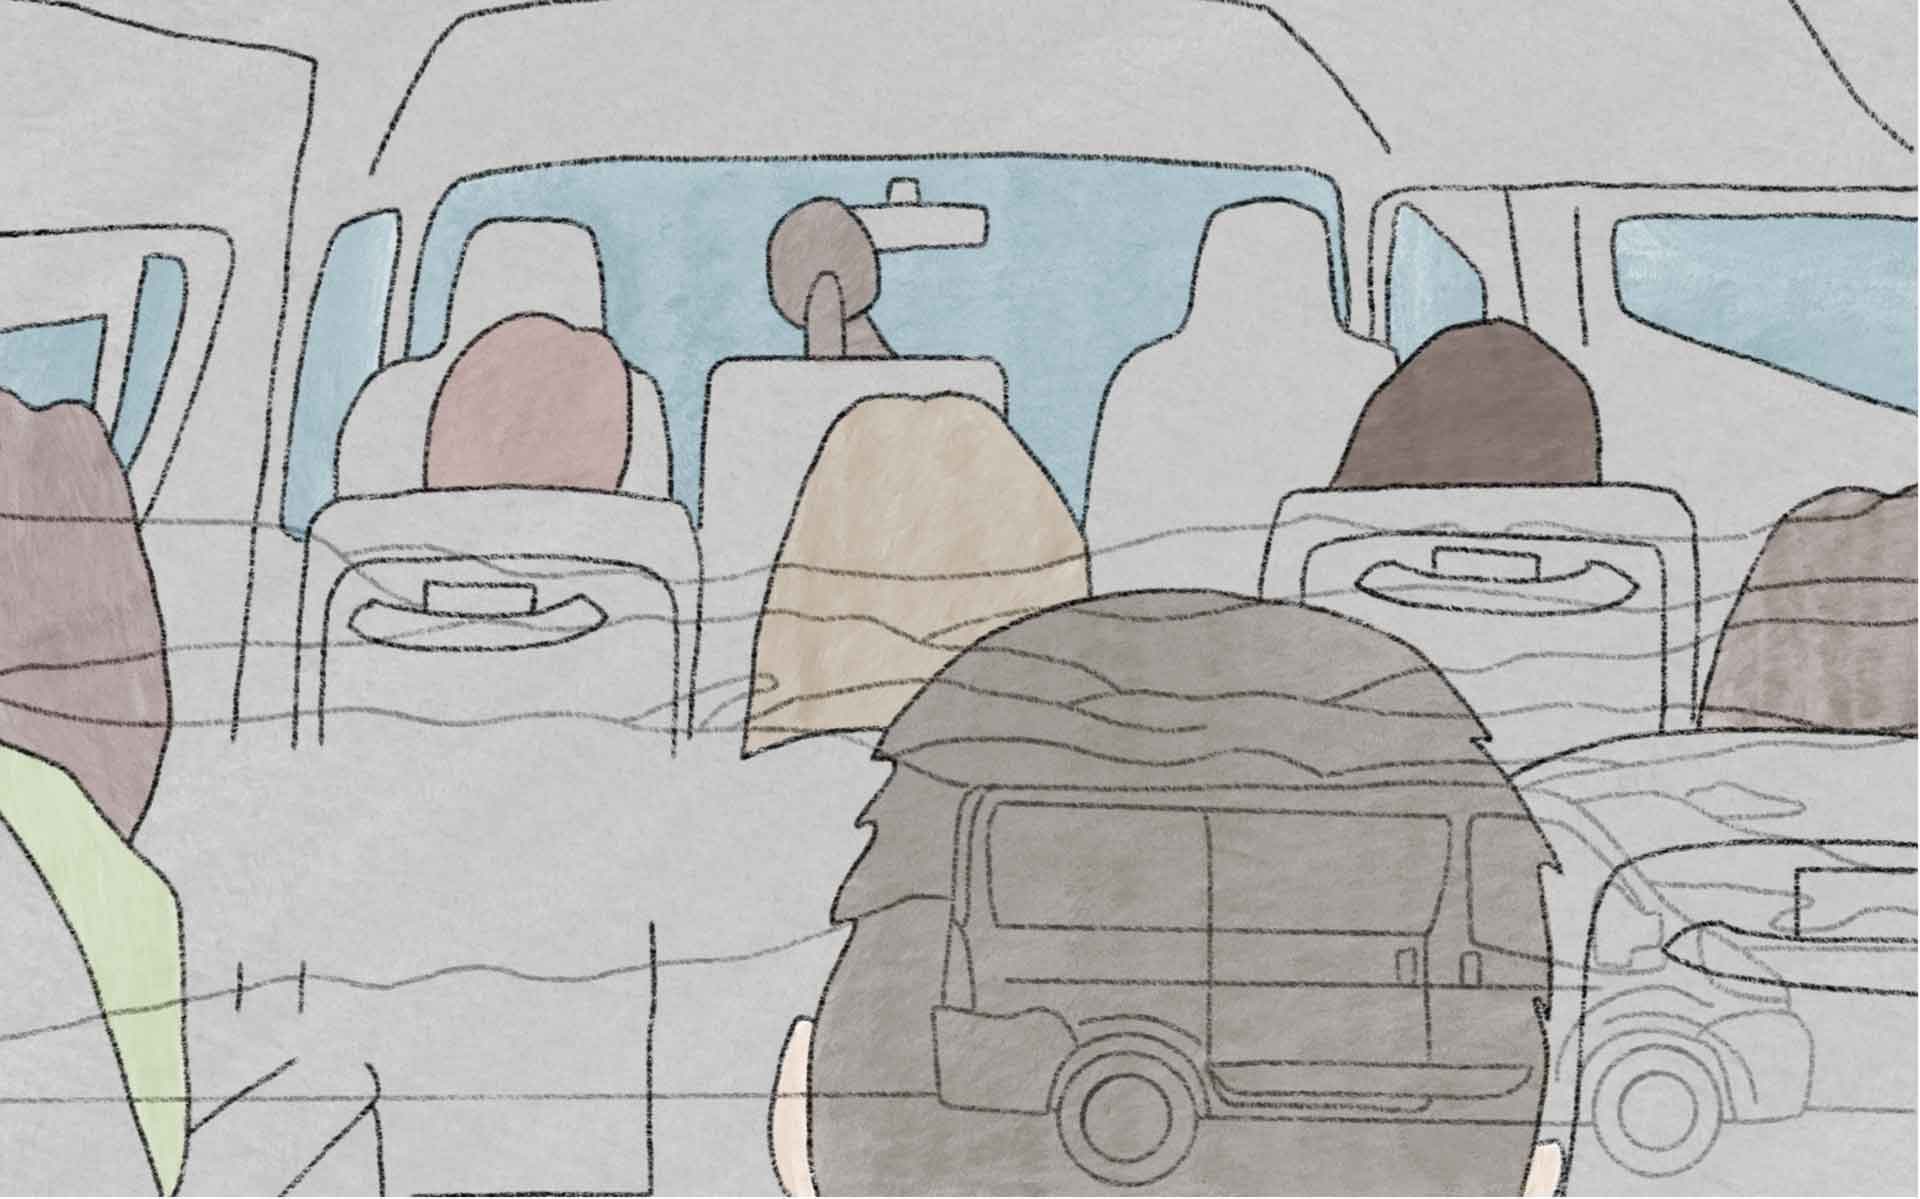 Stylized illustration of students inside a van.